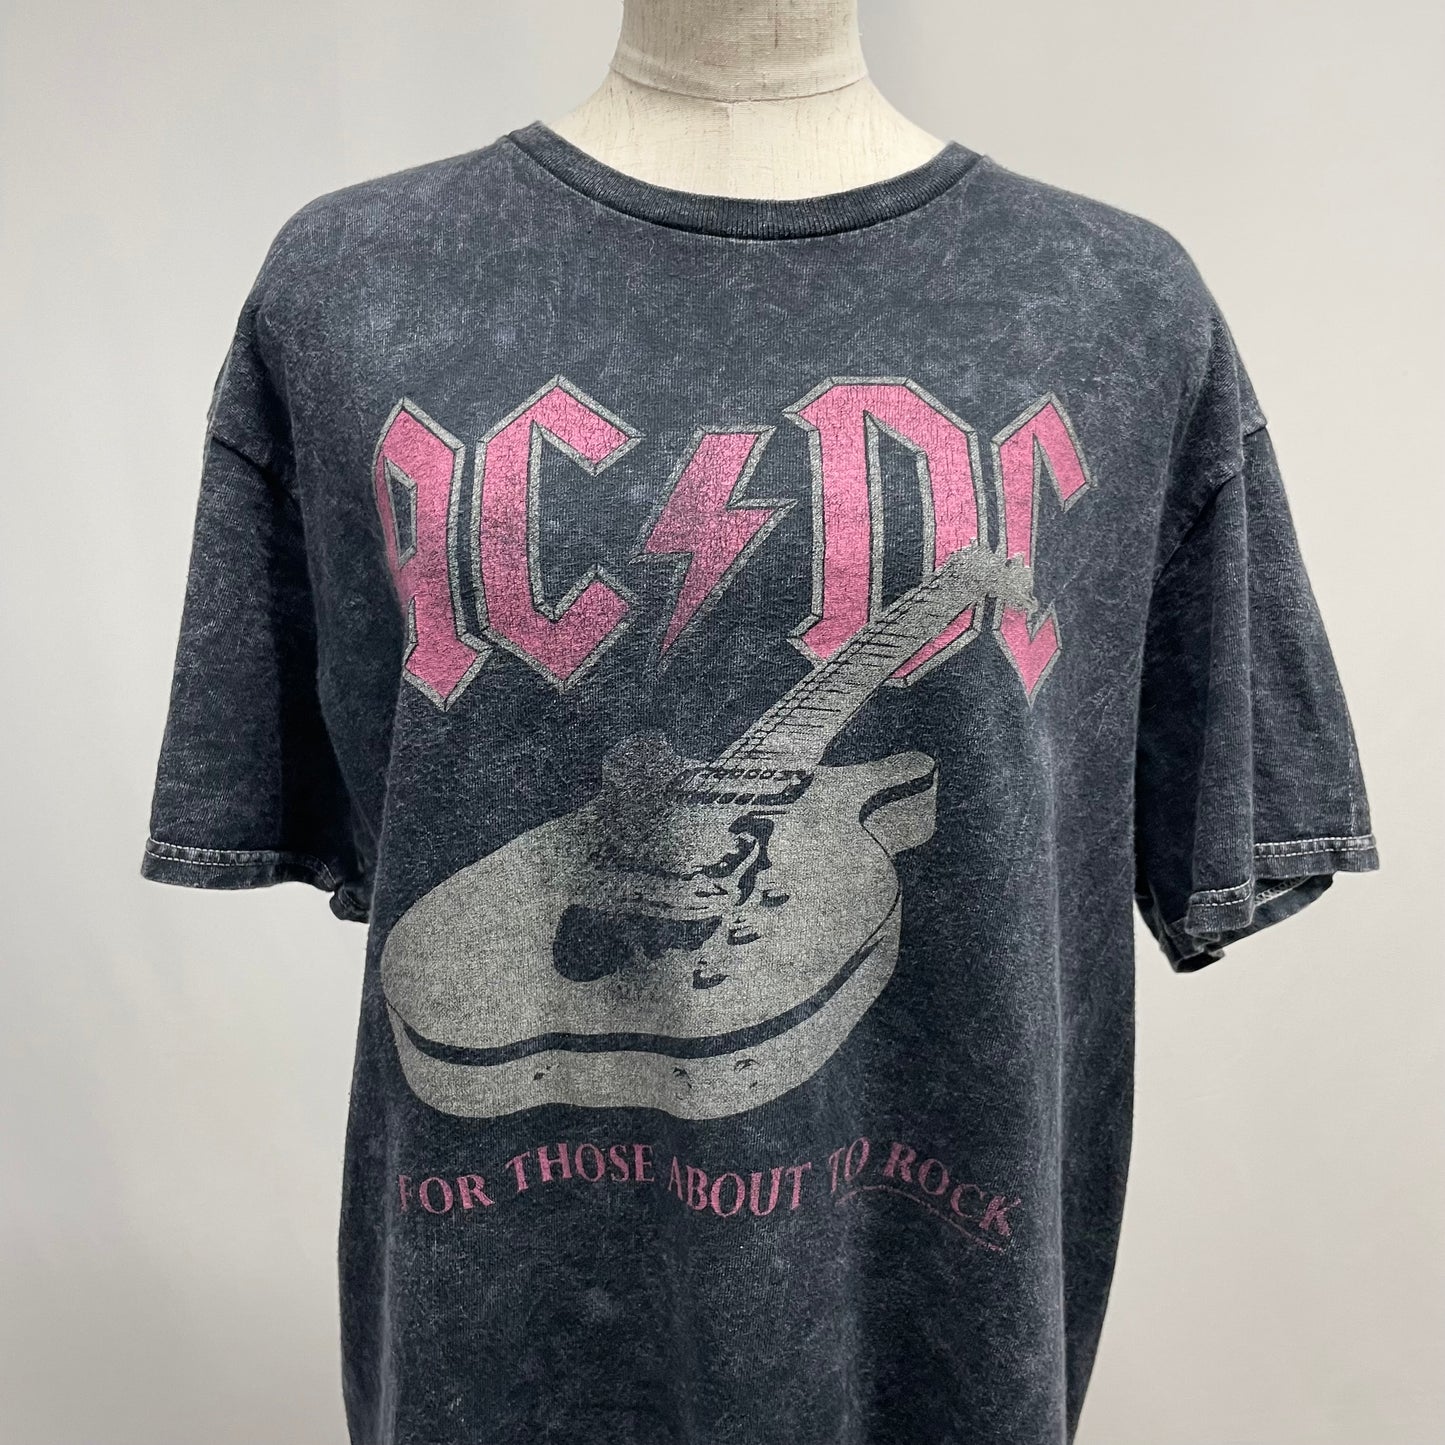 00's "AC/DC" band t-shirt